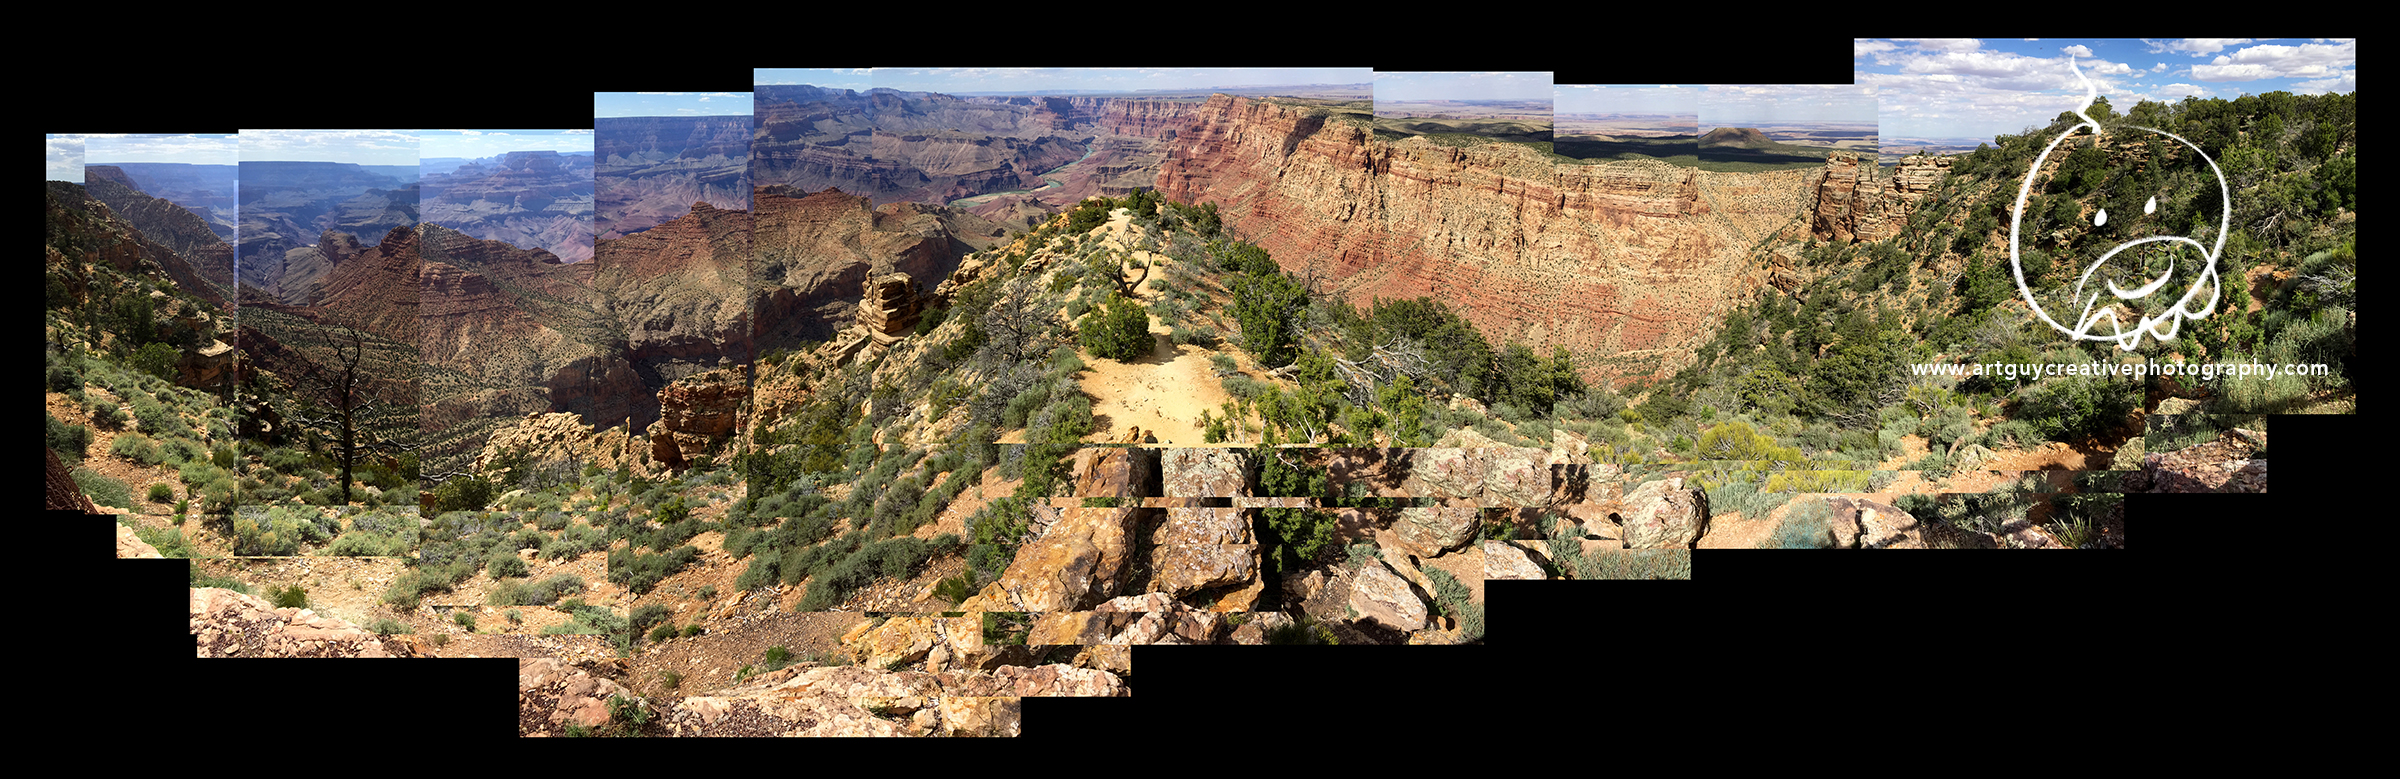 Grand Canyon Arizona Desert View Photography